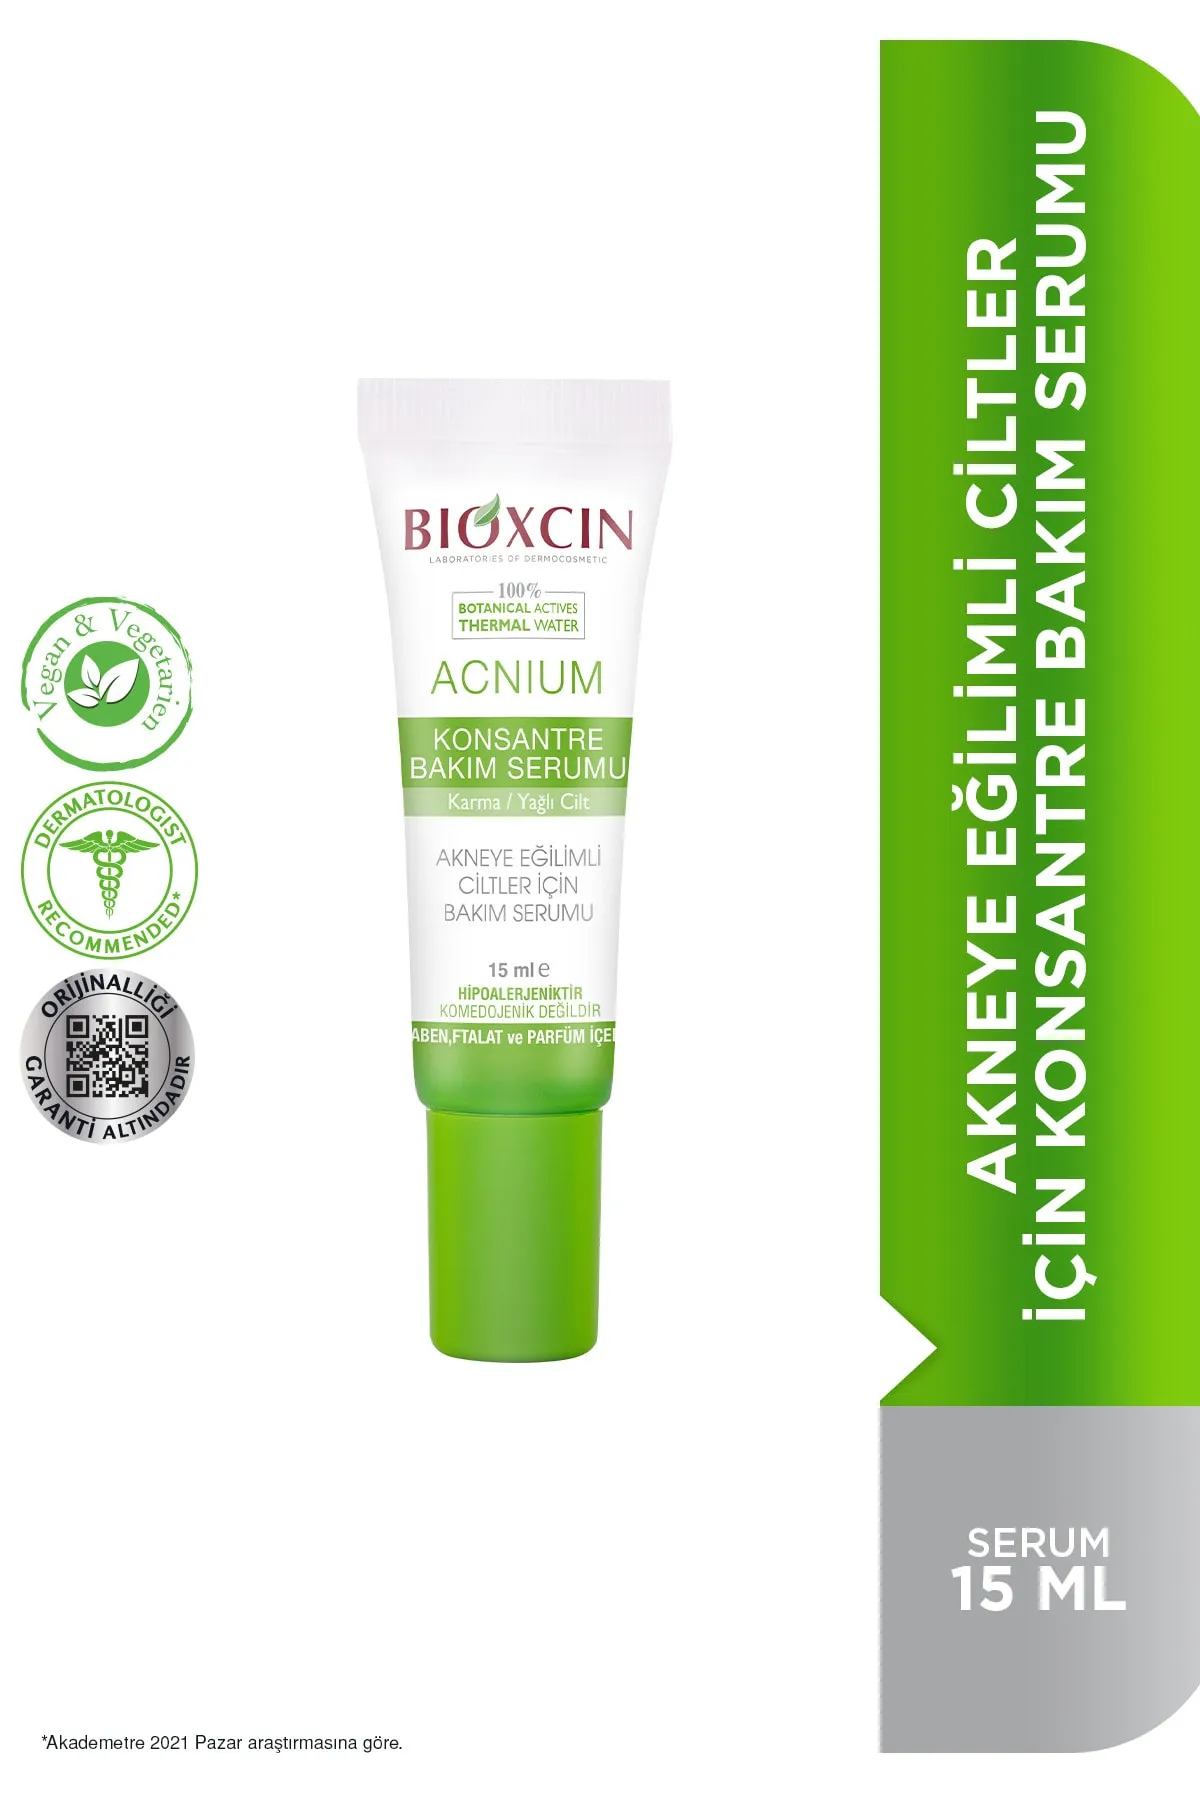 Bioxcin Acnium Konsantre Bakım Serumu 15 ml - 2